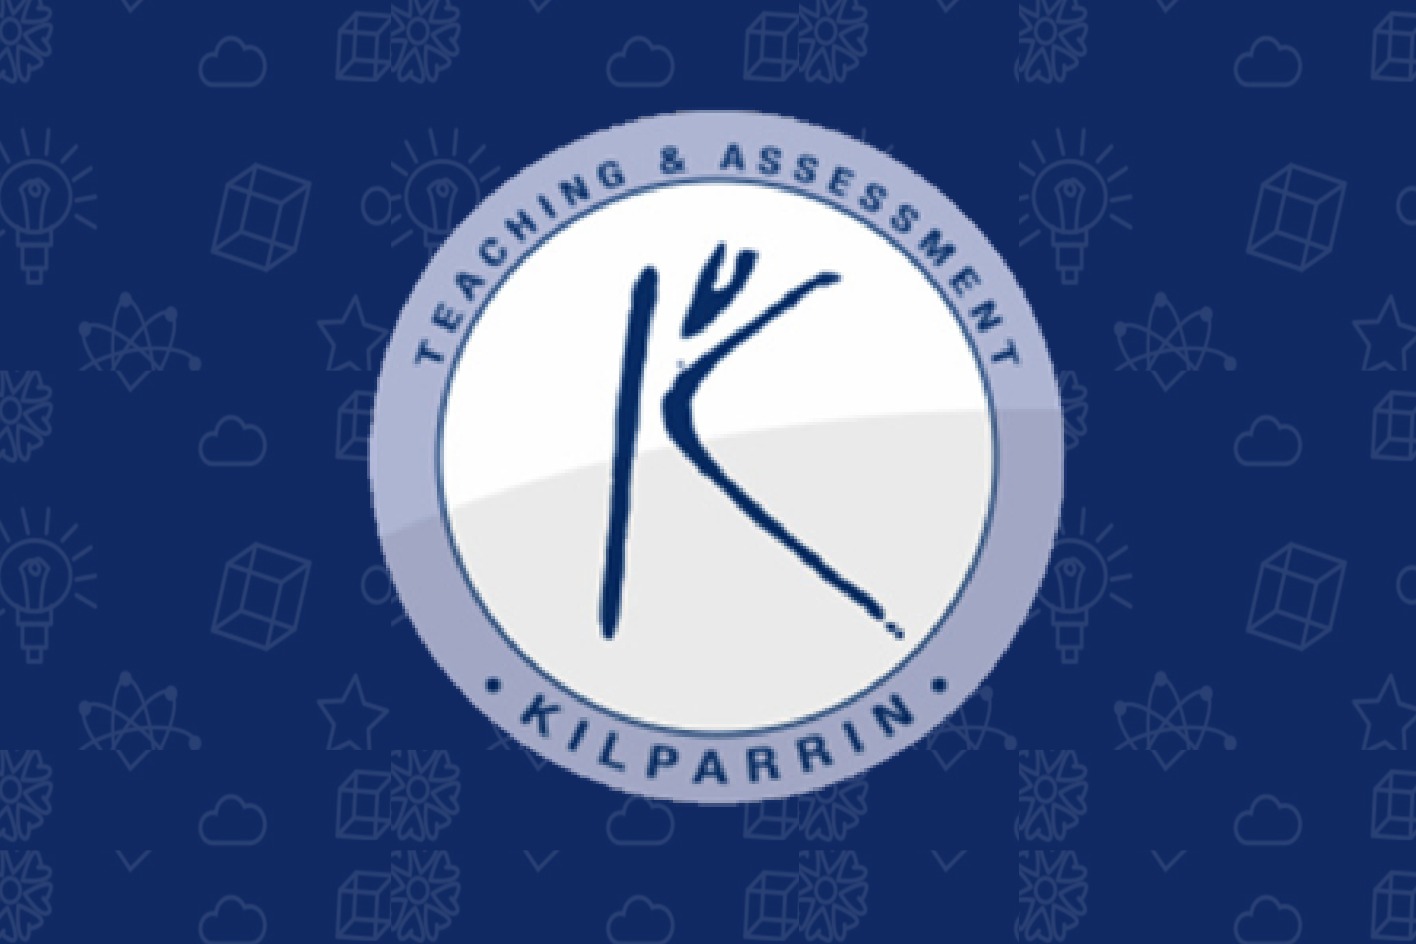 Kilparrin Logo navy background